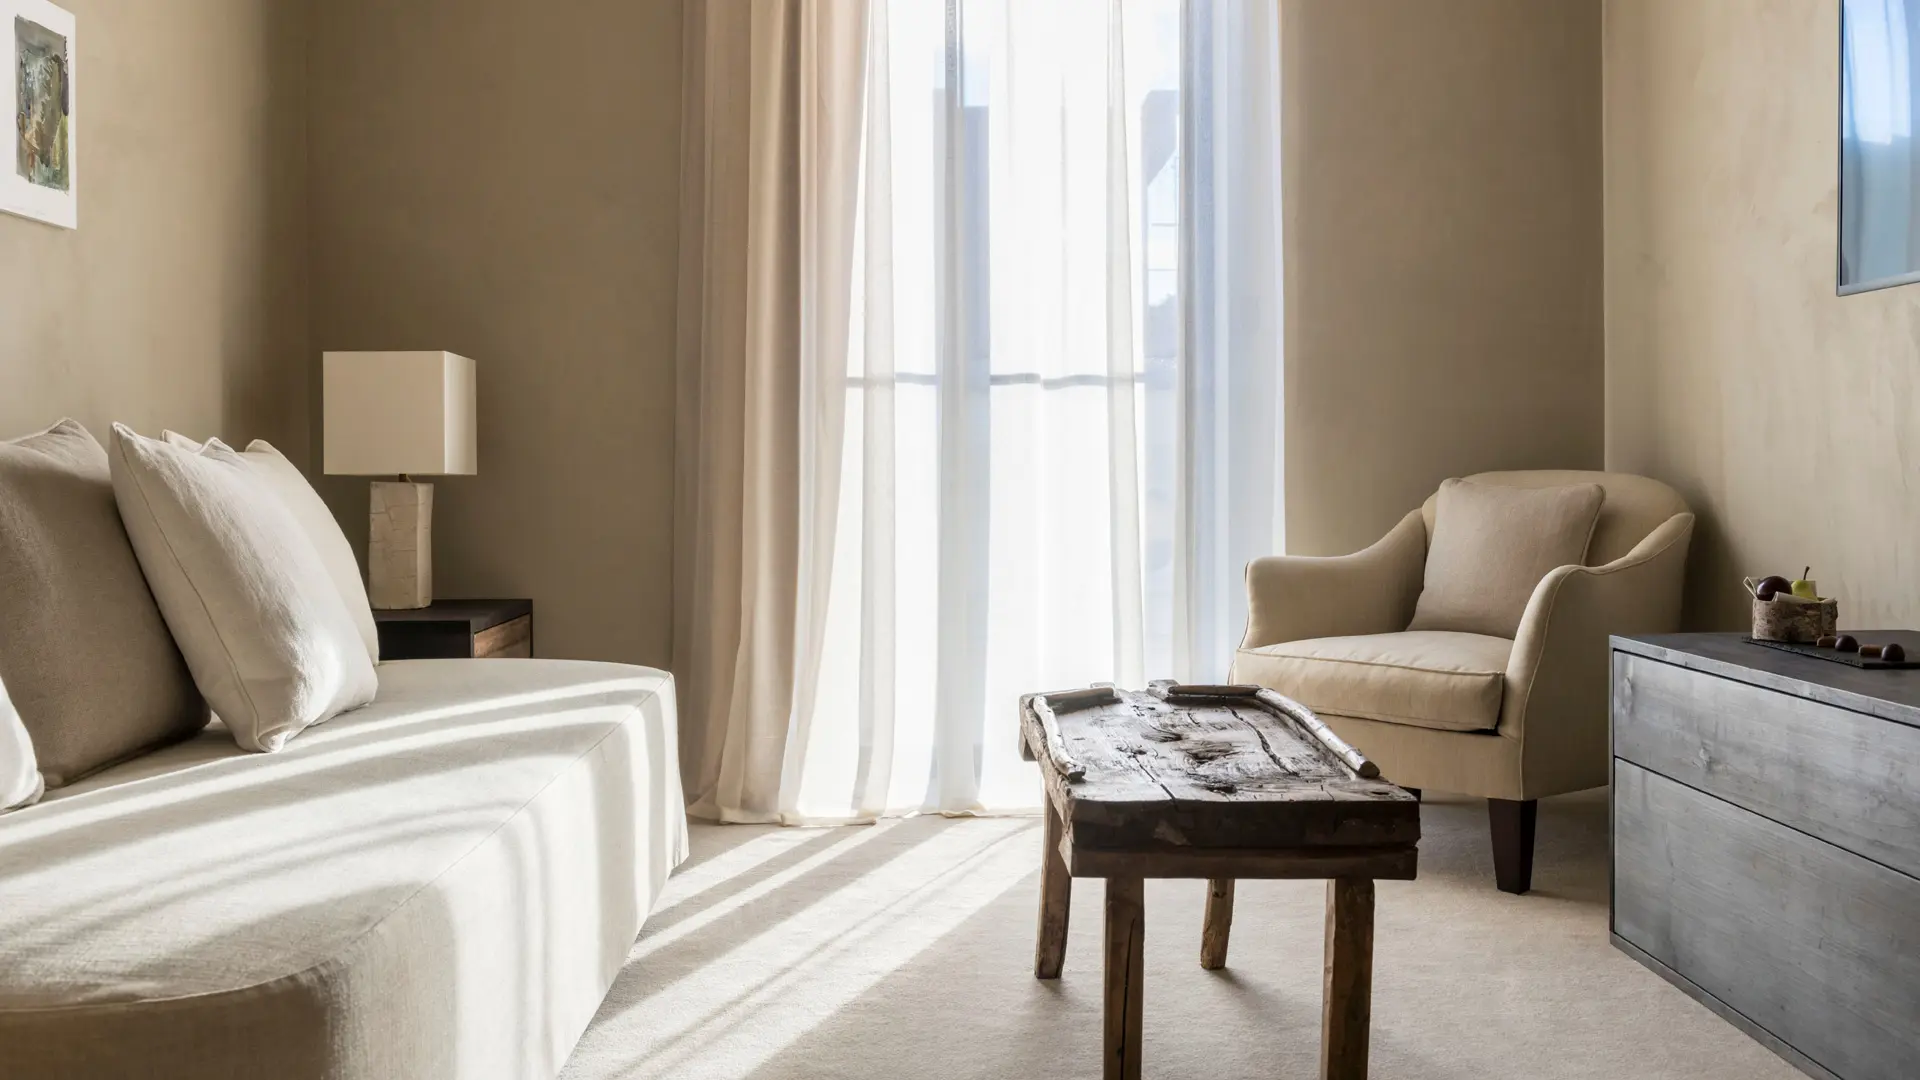 Hotel review Accommodation' - Bayerischer Hof - 1